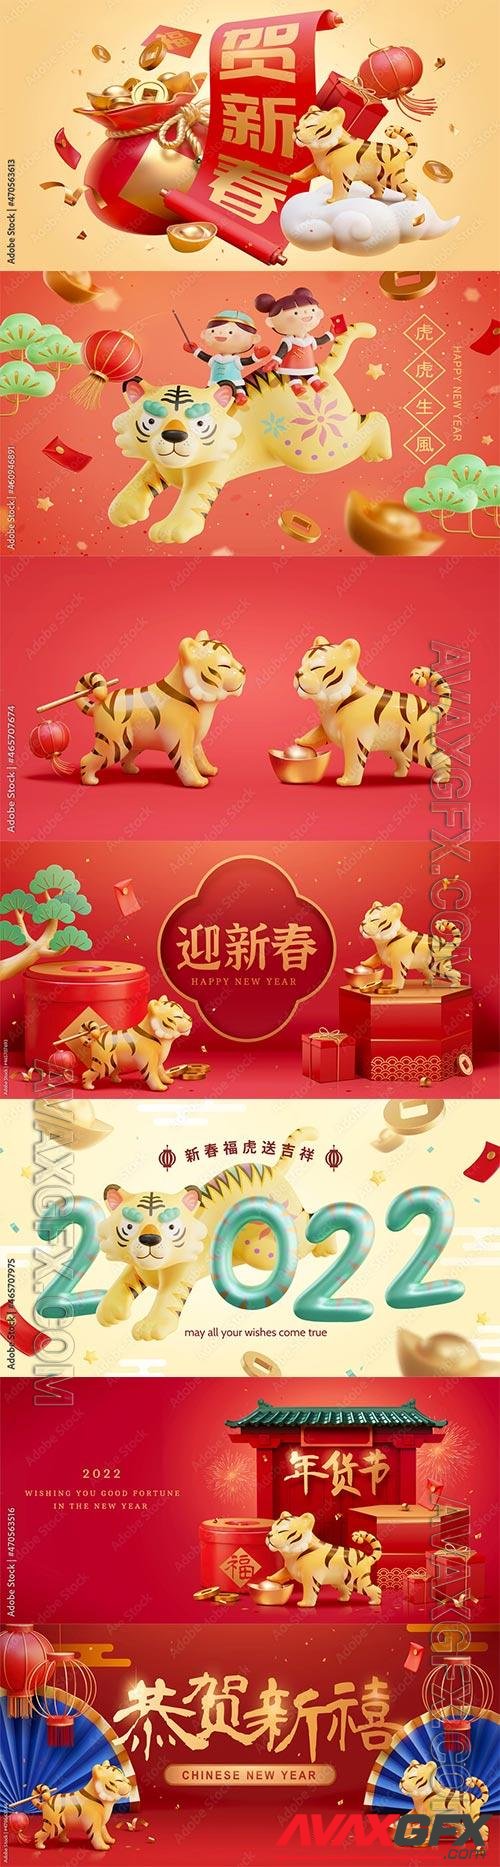 3d CNY tiger zodiac scene vector design